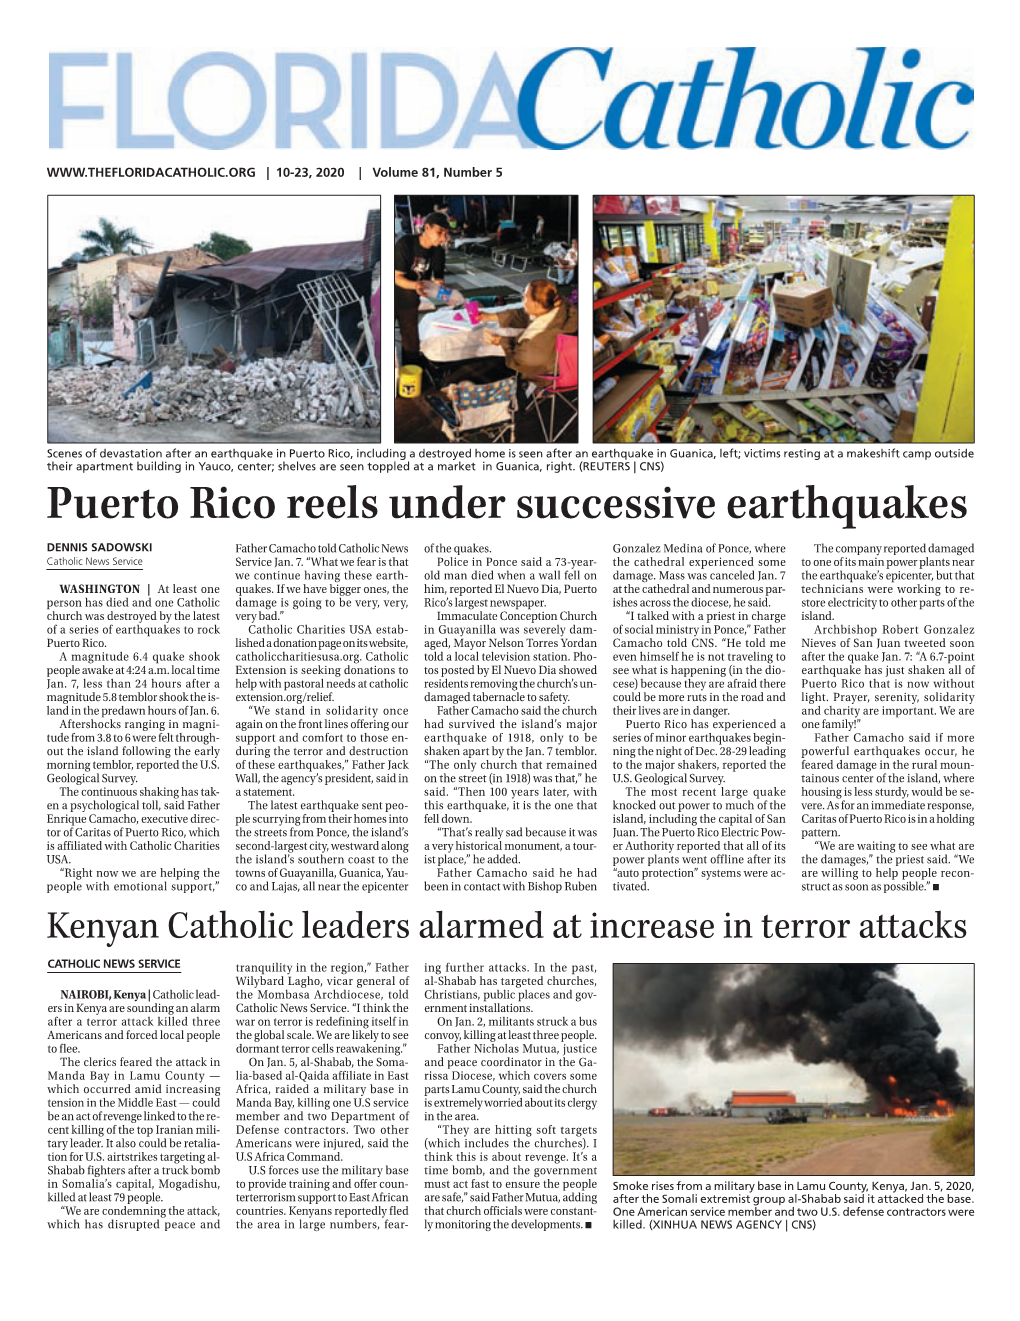 Puerto Rico Reels Under Successive Earthquakes DENNIS SADOWSKI Father Camacho Told Catholic News of the Quakes